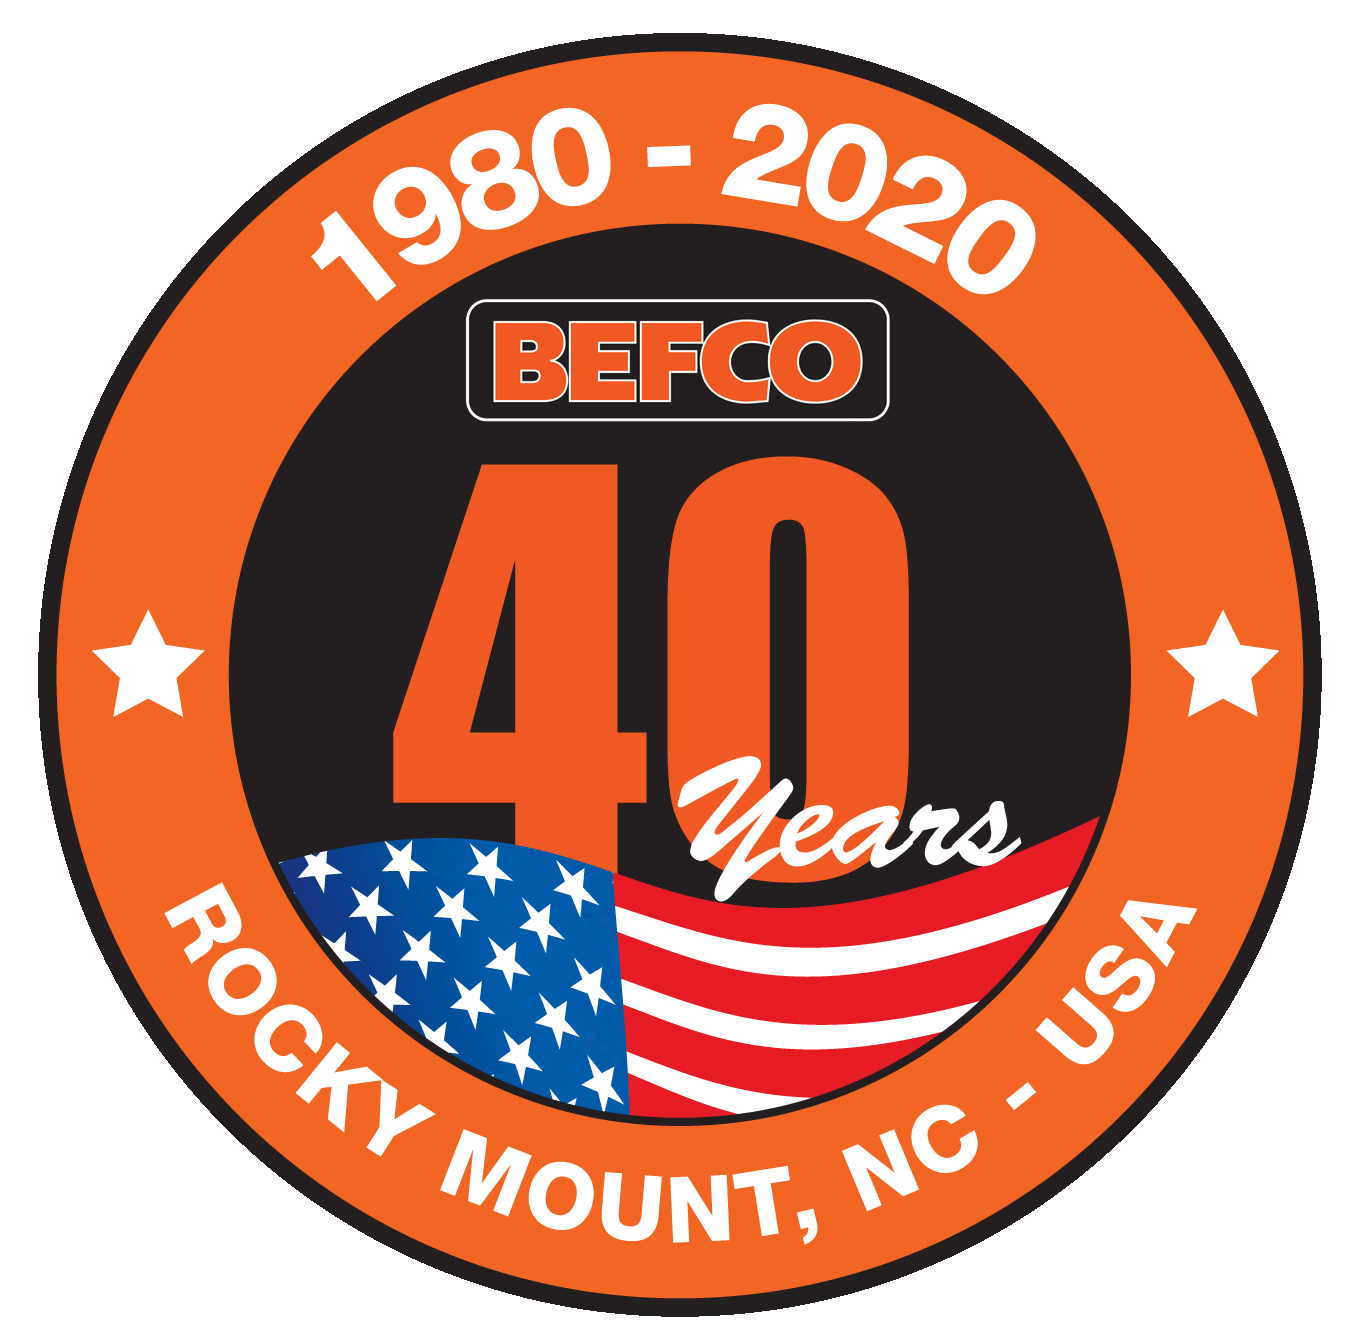 BEFCO 40th anniversary